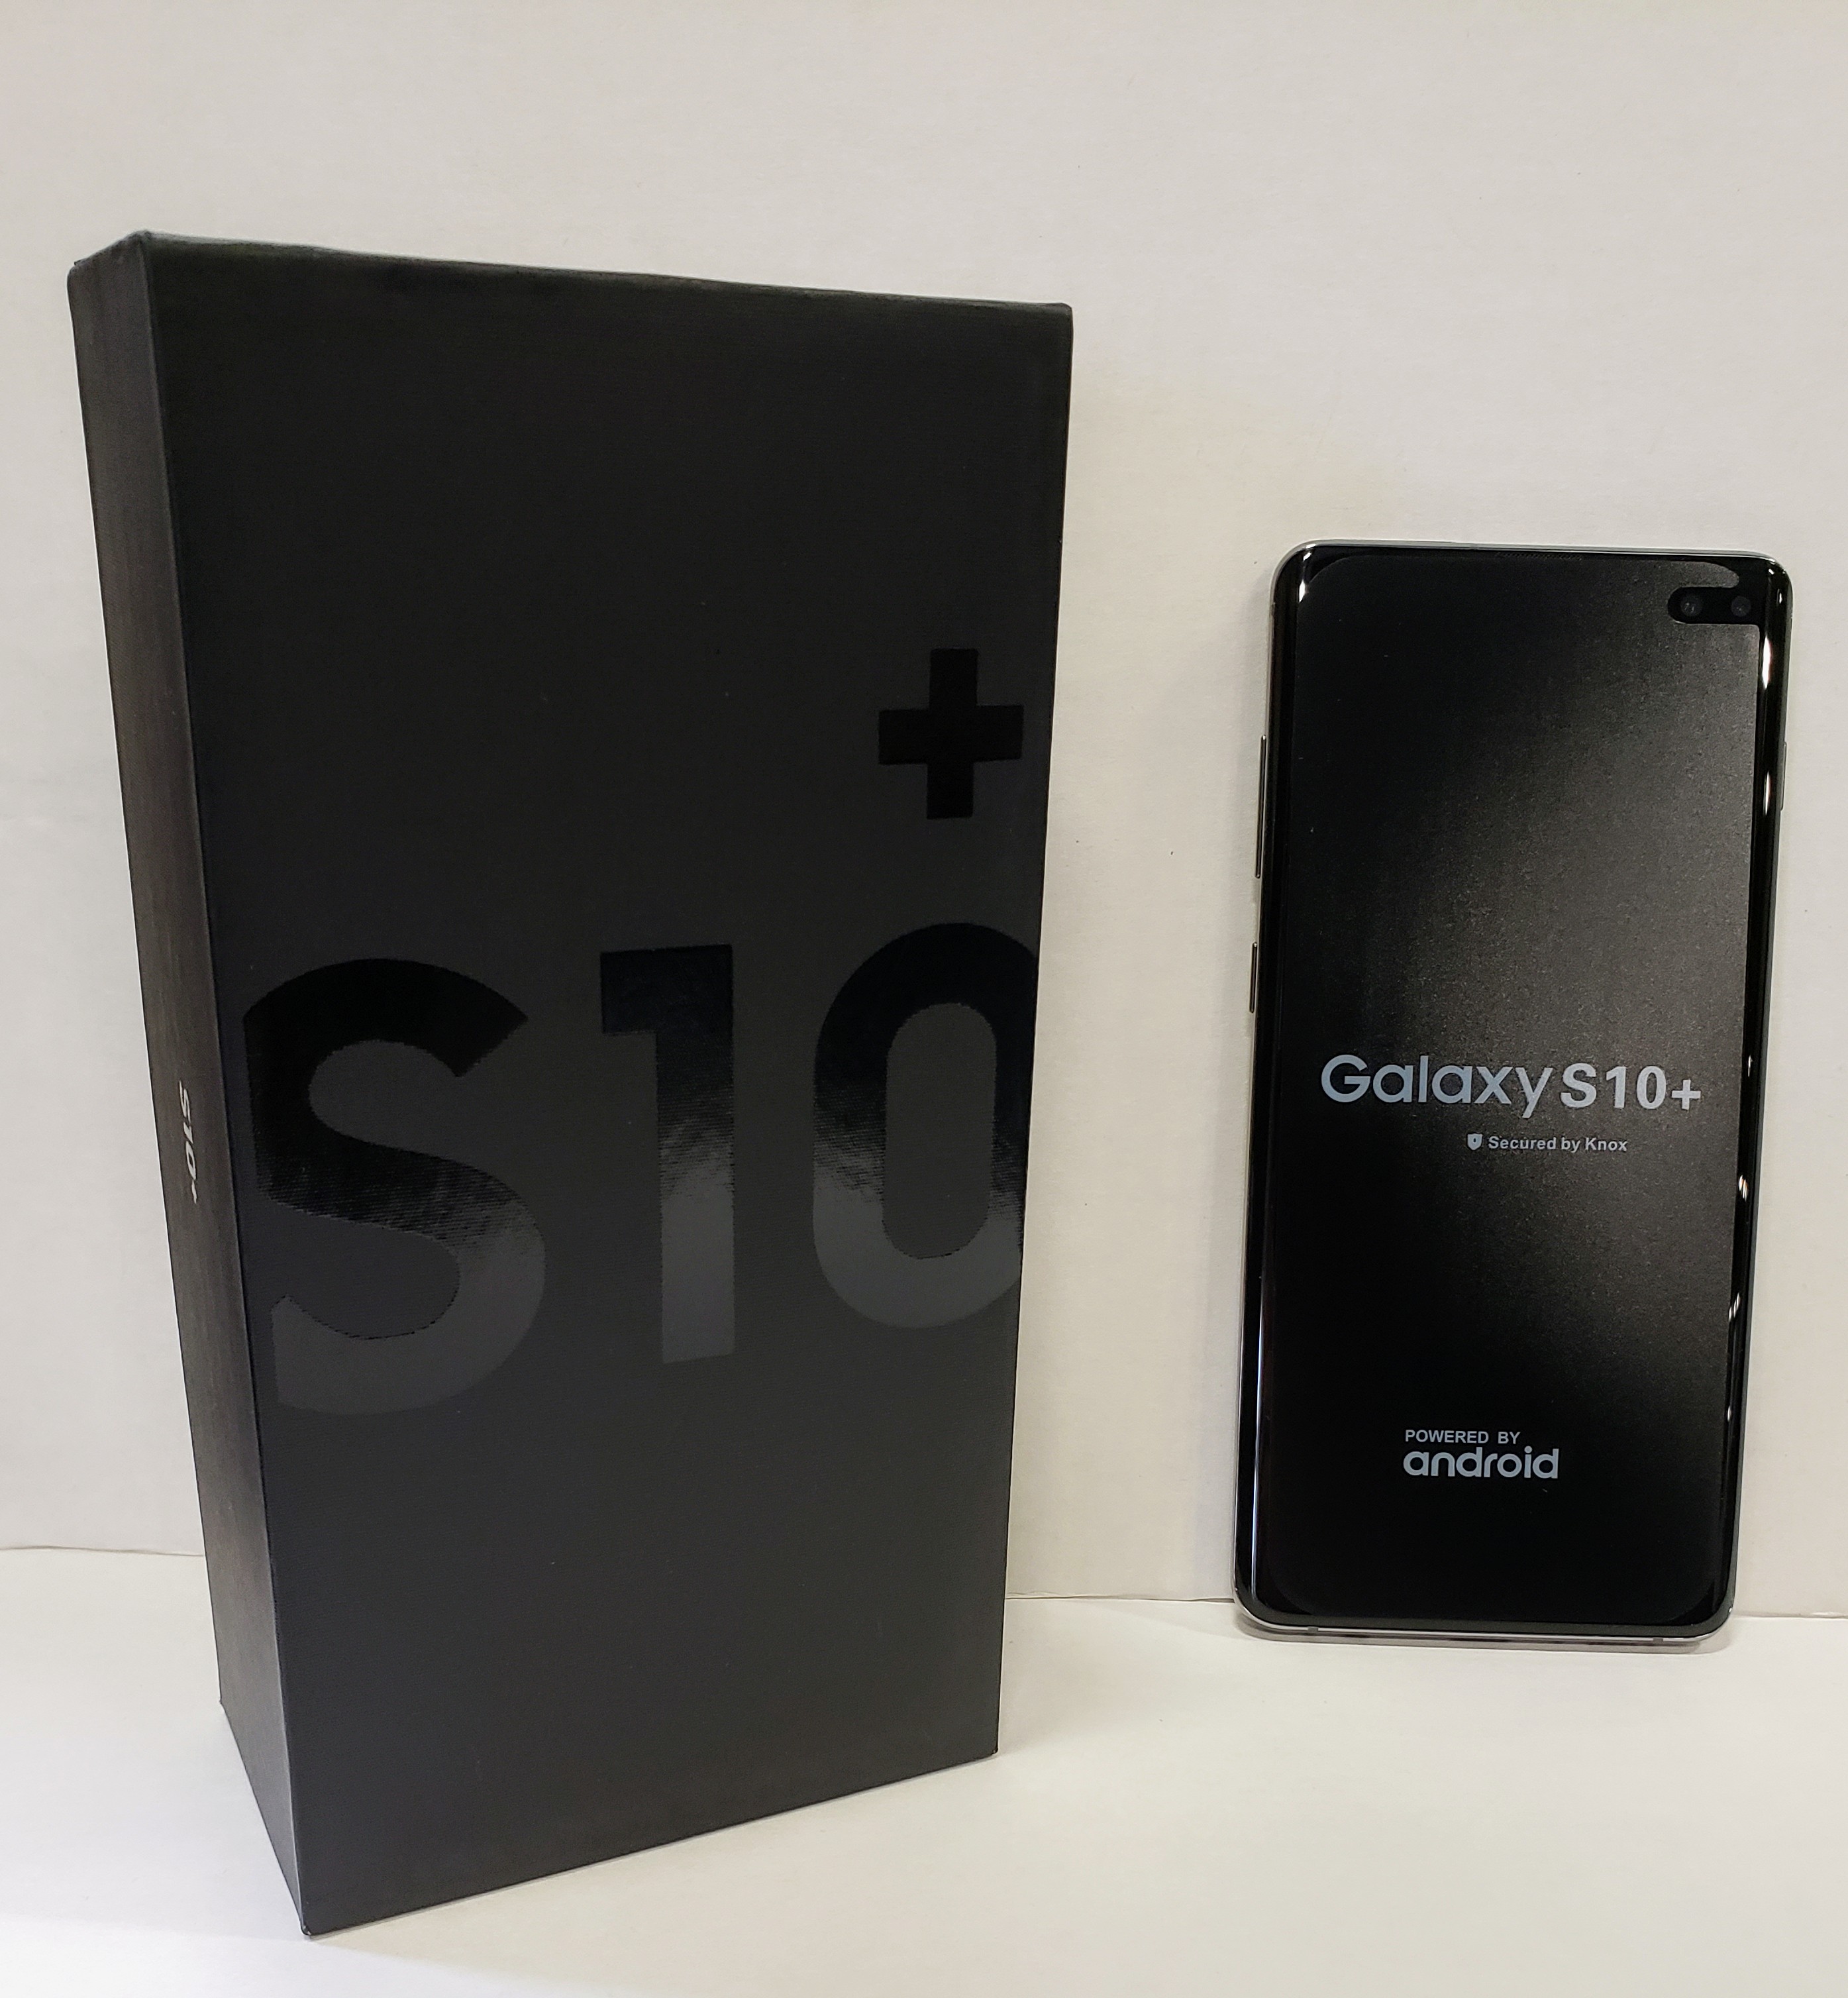 Samsung Galaxy S10 Plus 128GB - Black -  OPEN BOX NEW 90 DAY WARRANTY  NEVER USED